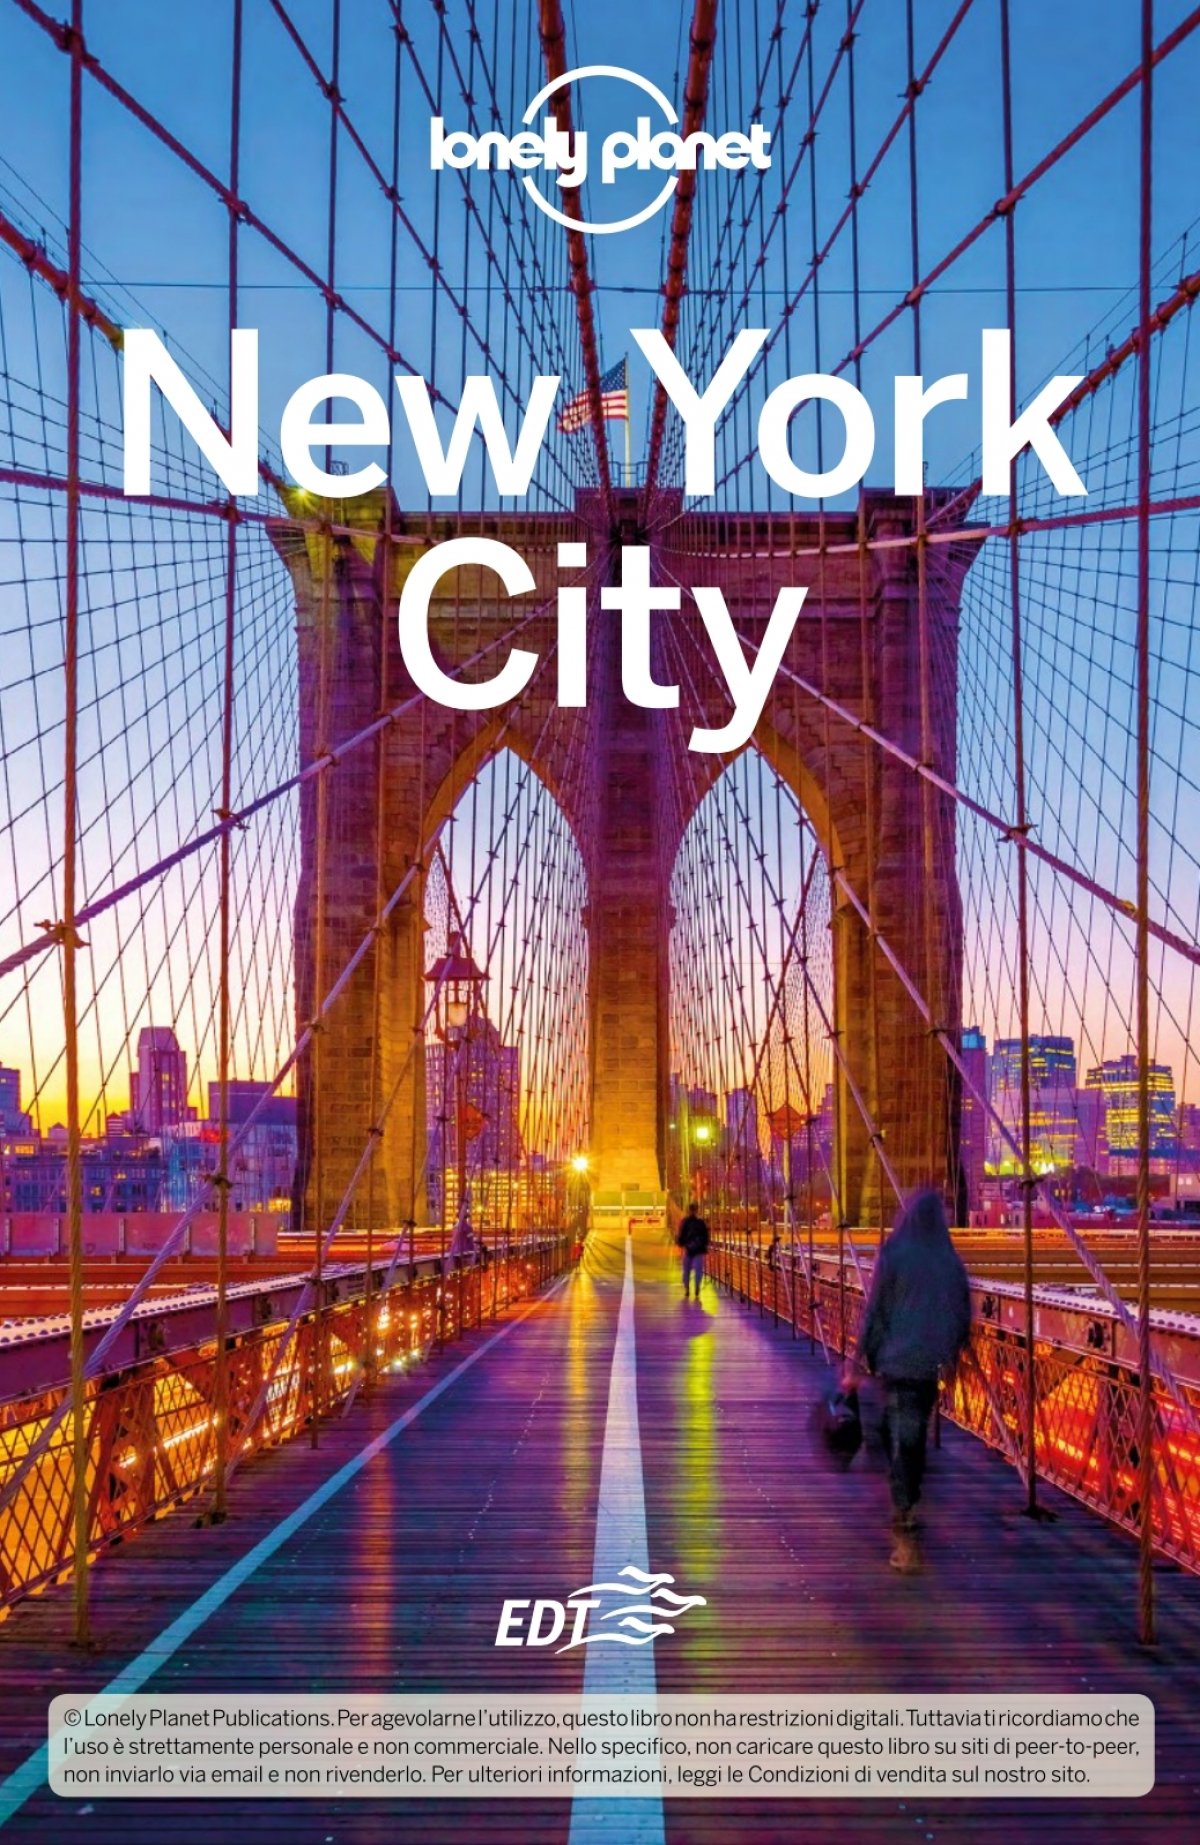 New York City - Lonely Planet - nov 18